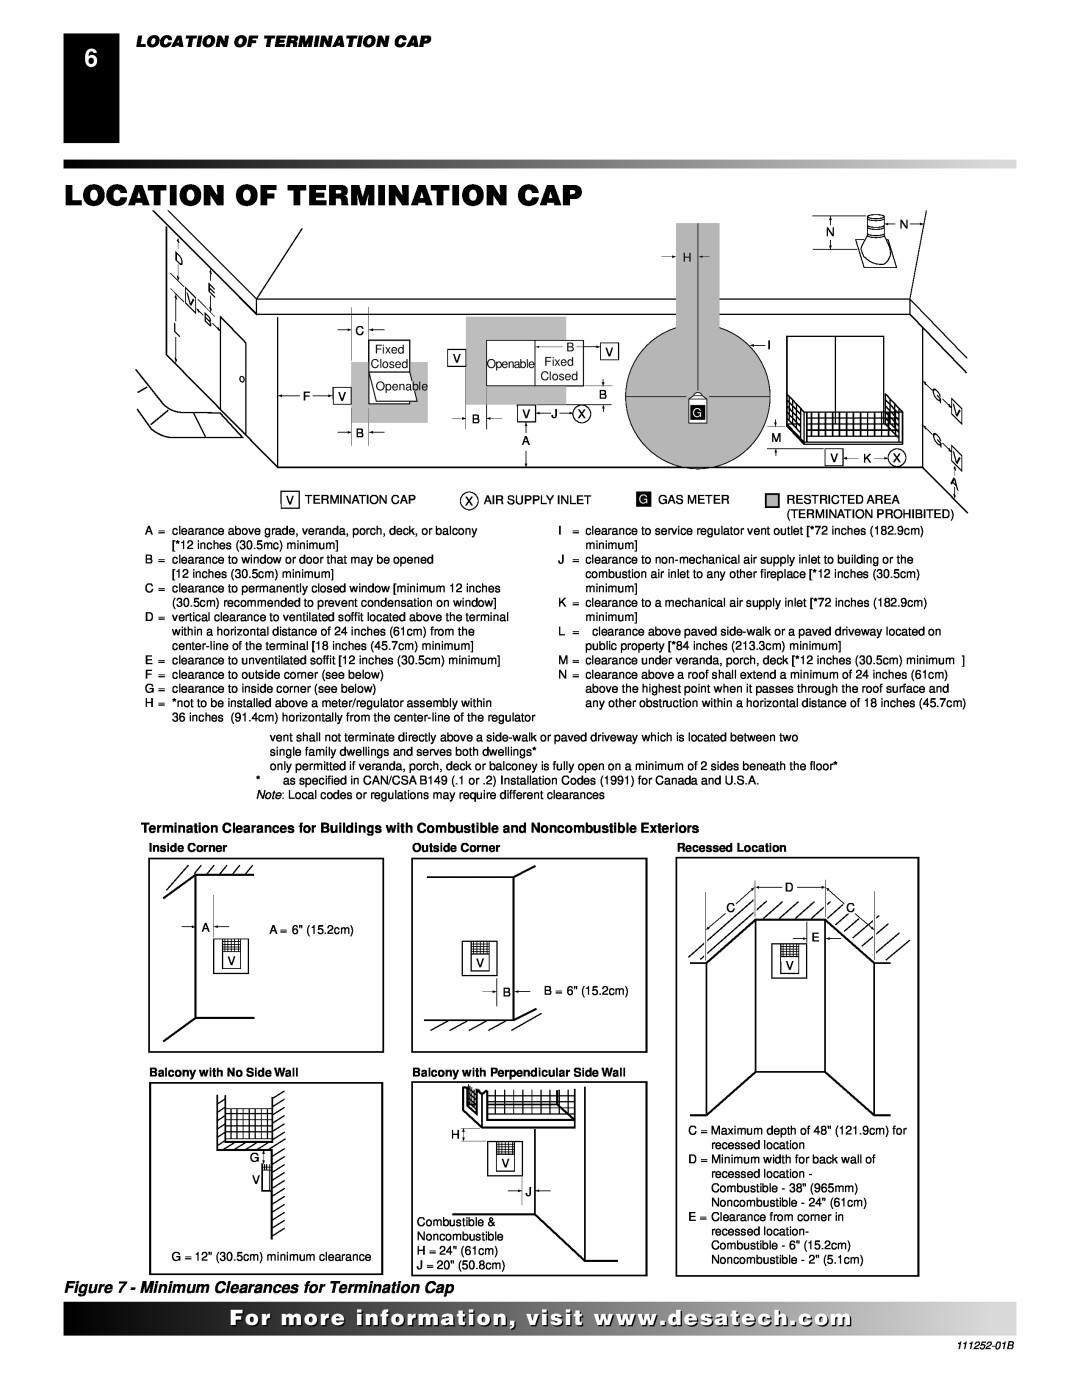 Desa (V)V36PA(1) Location Of Termination Cap, D E B L, V G V A, Minimum Clearances for Termination Cap, Inside Corner 